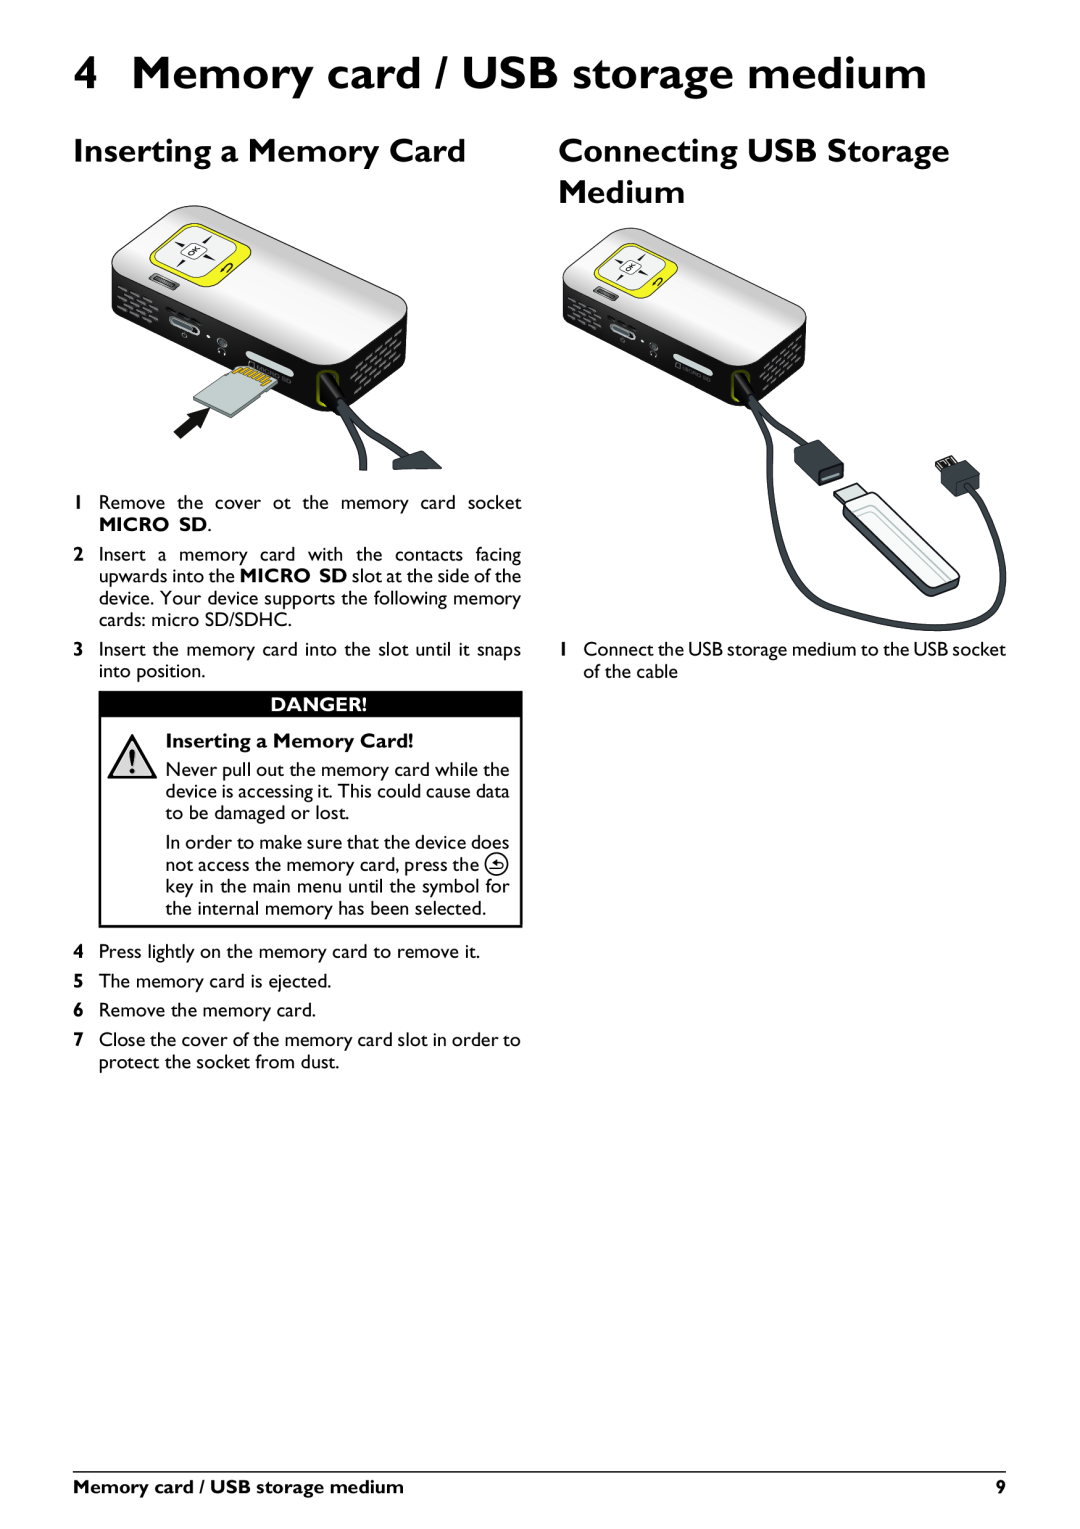 Philips PPX2230, PPX2330 Memory card / USB storage medium, Inserting a Memory Card, Connecting USB Storage, Medium, Danger 